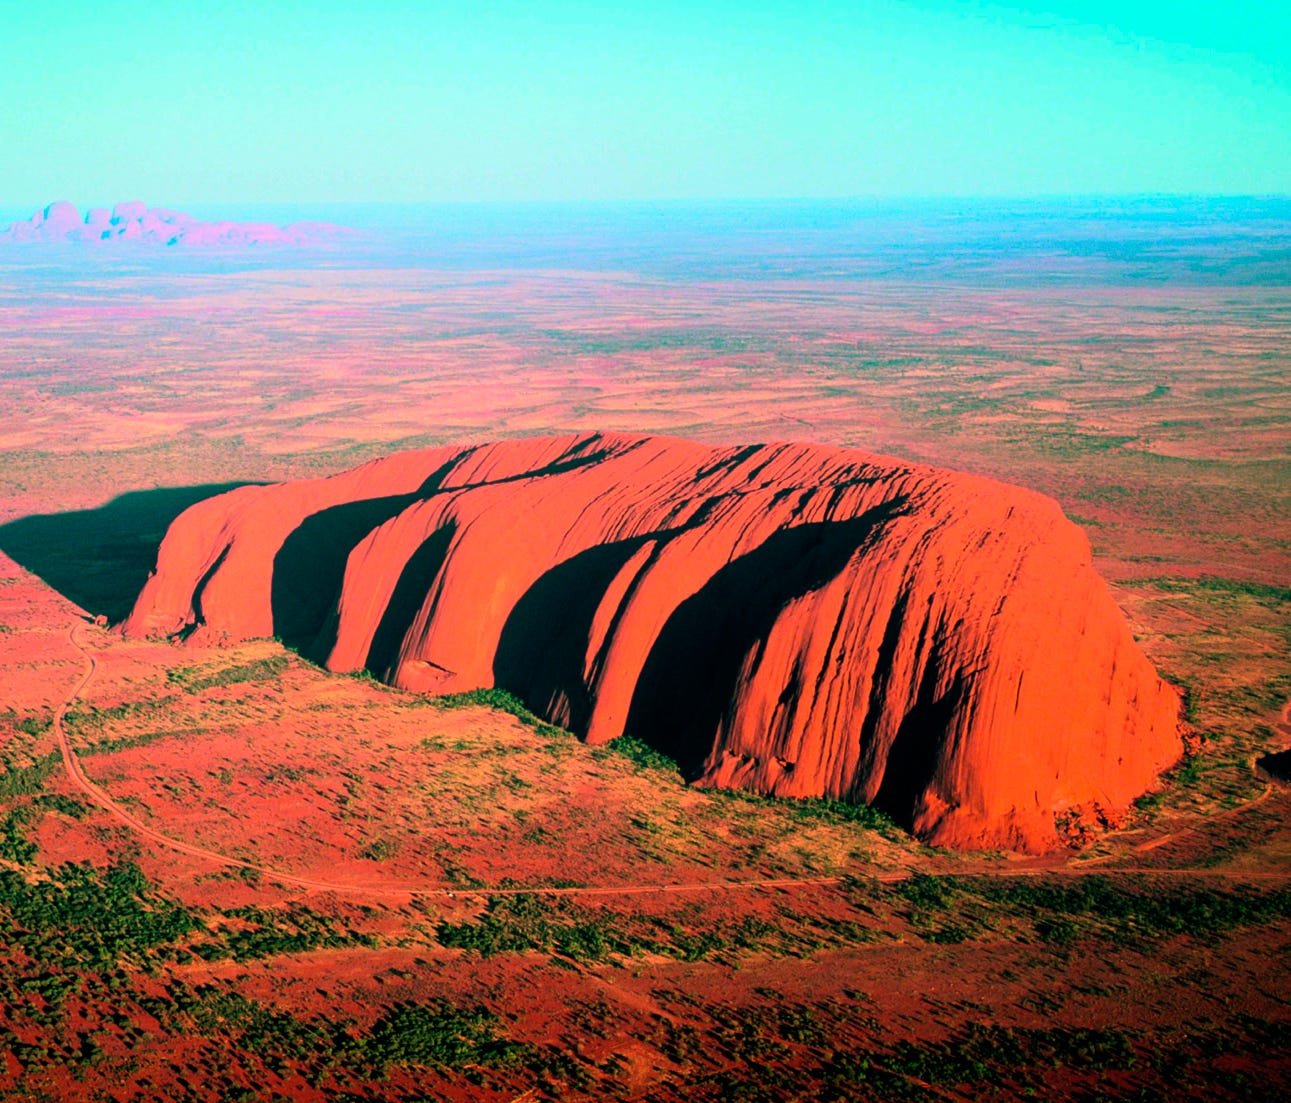 Uluru, a huge sandstone monolith sacred to Aborigines in Australia.